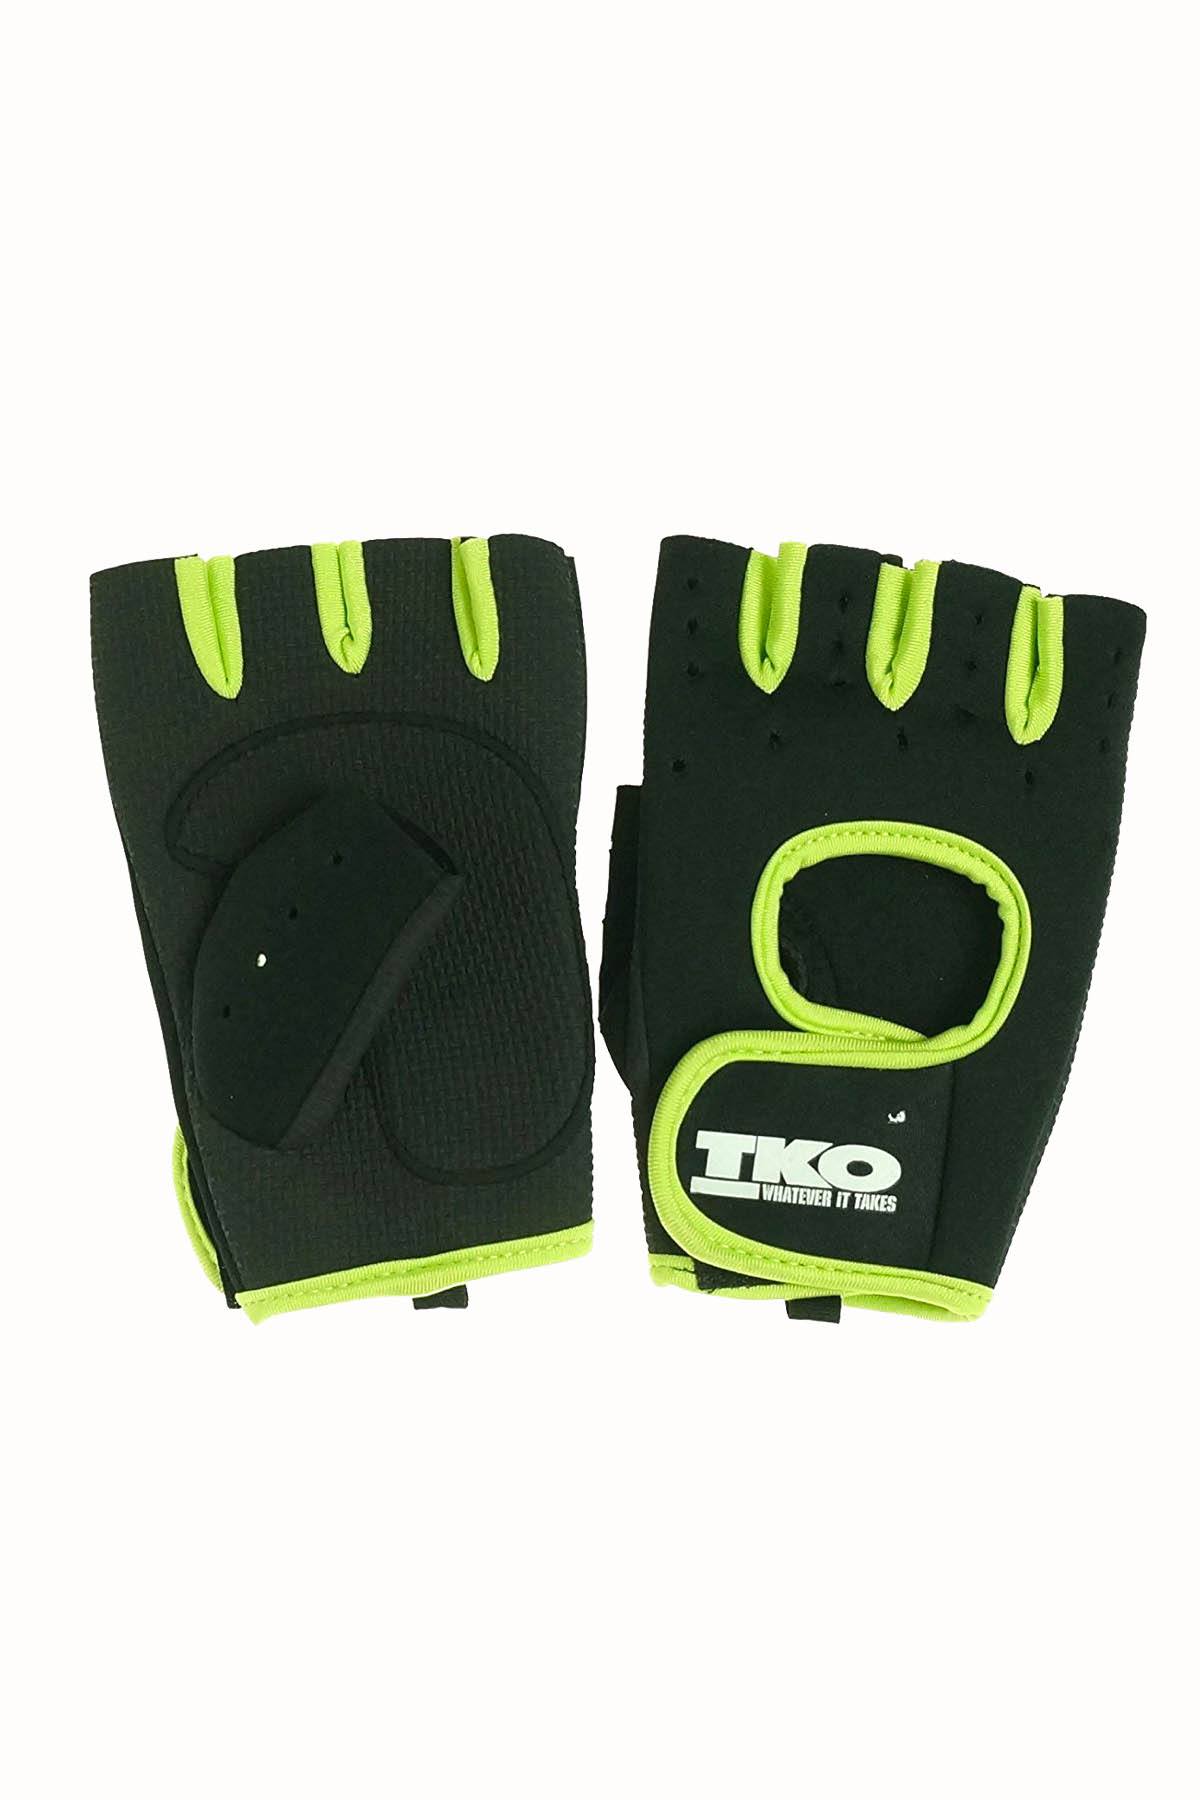 TKO Black & Lime Universal Padded Athletic Gloves